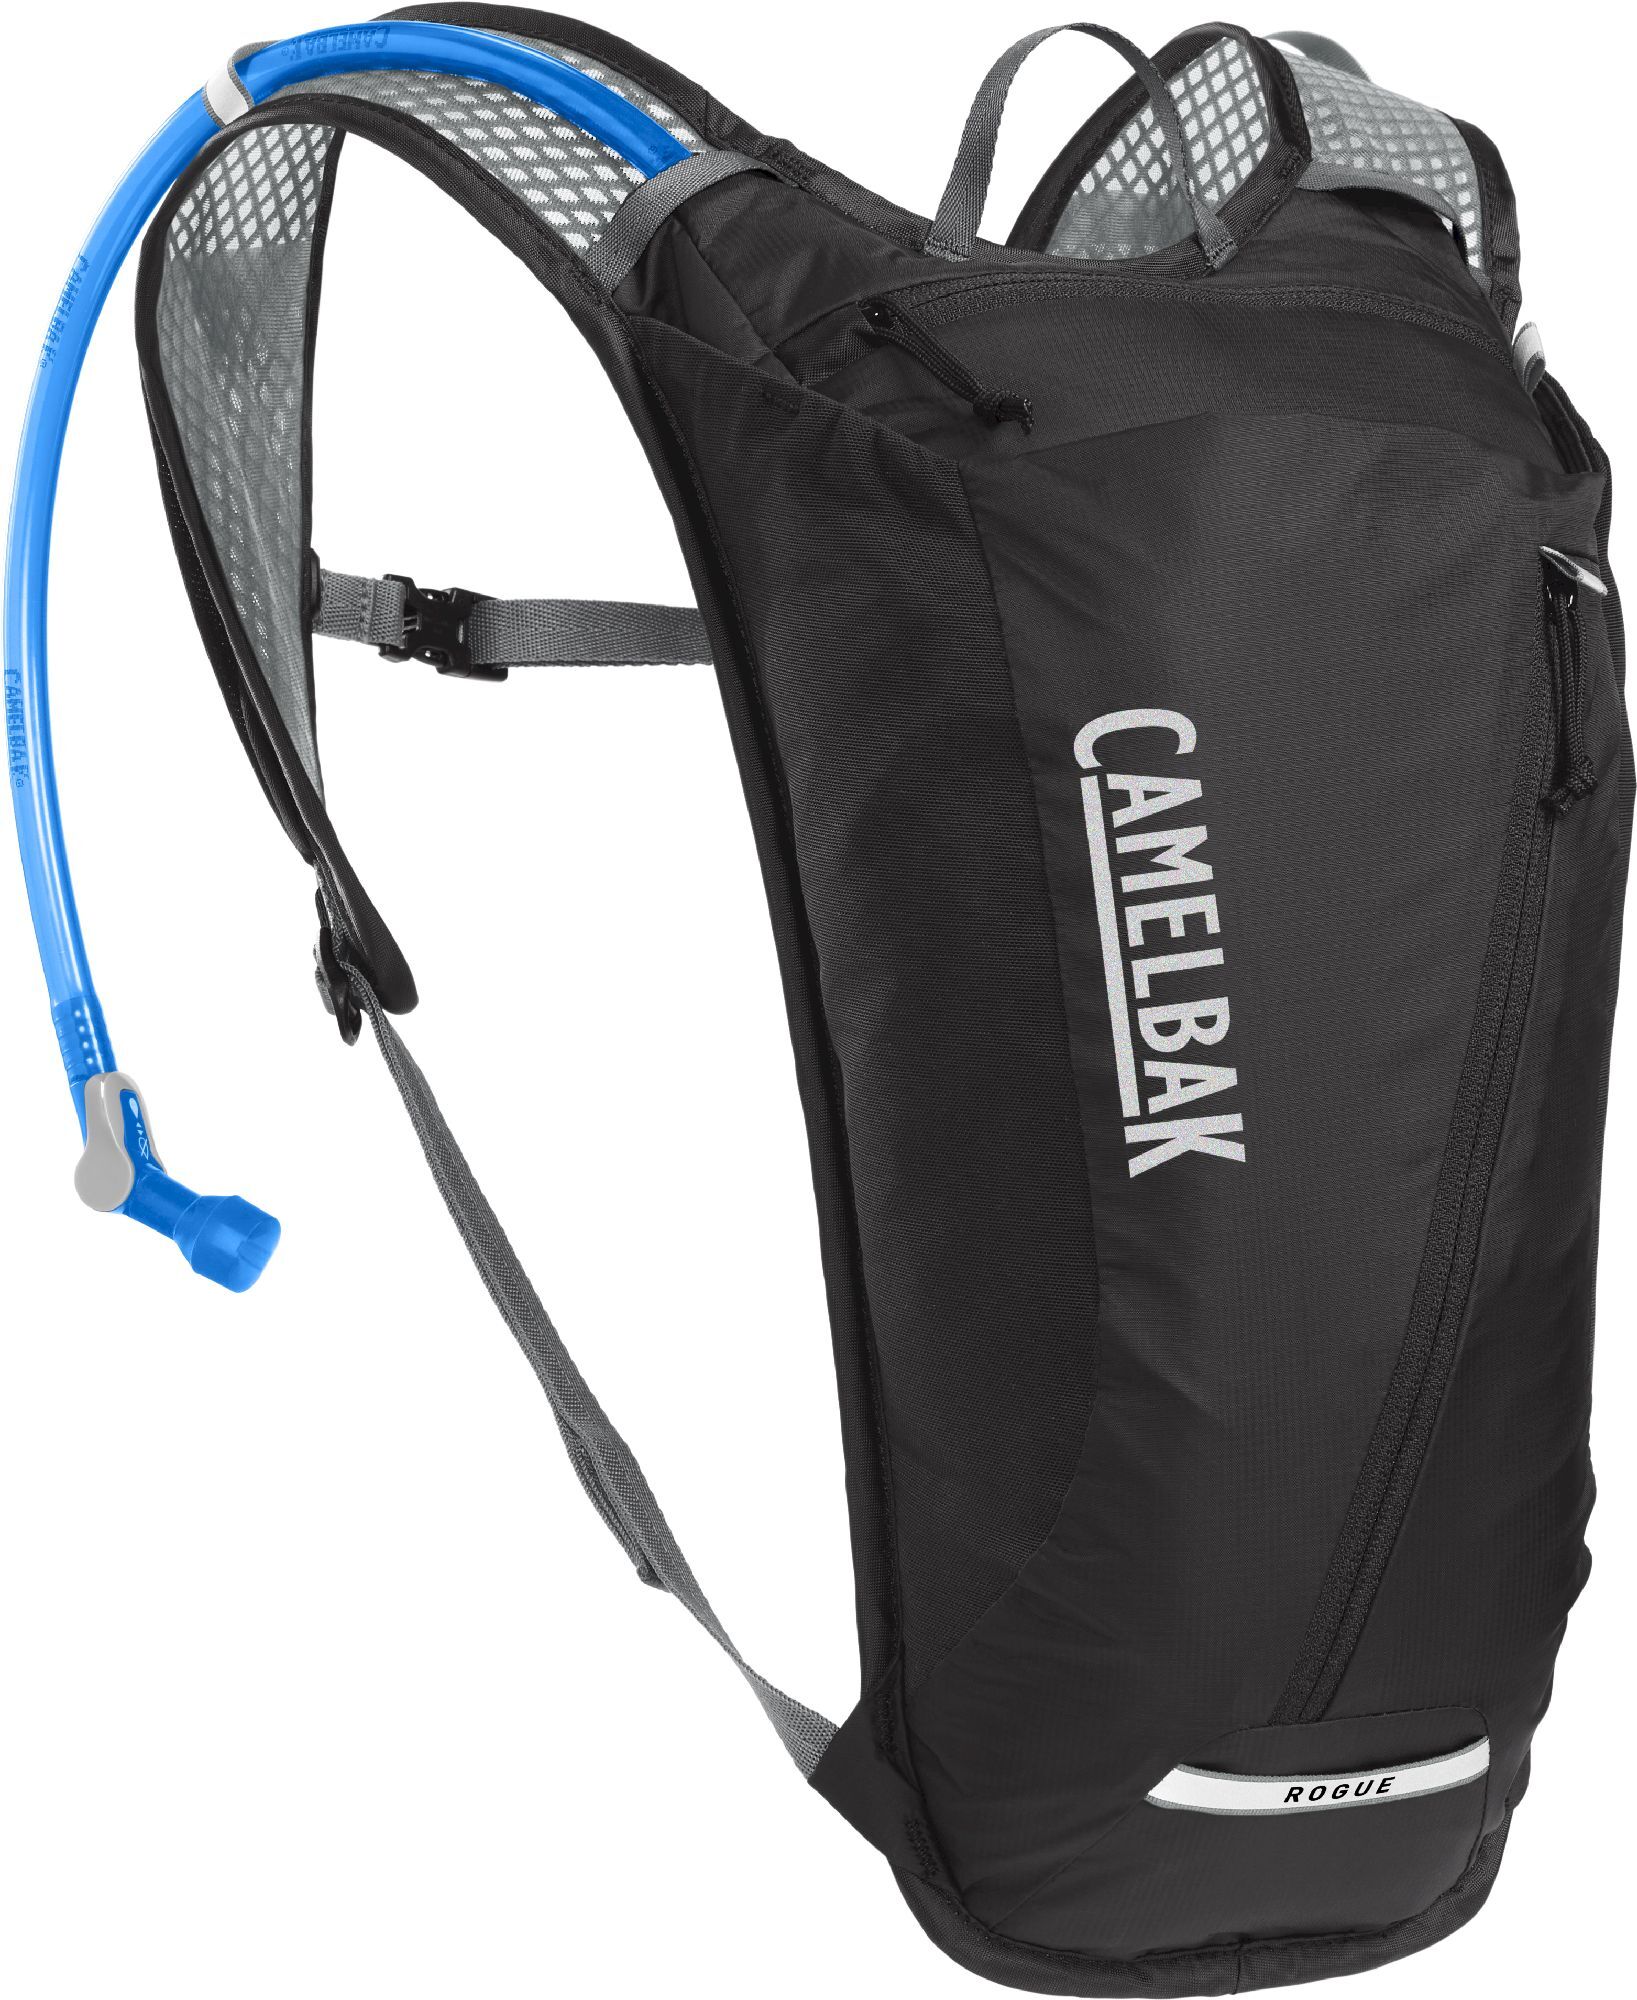 Camelbak Rogue Light - Cycling backpack